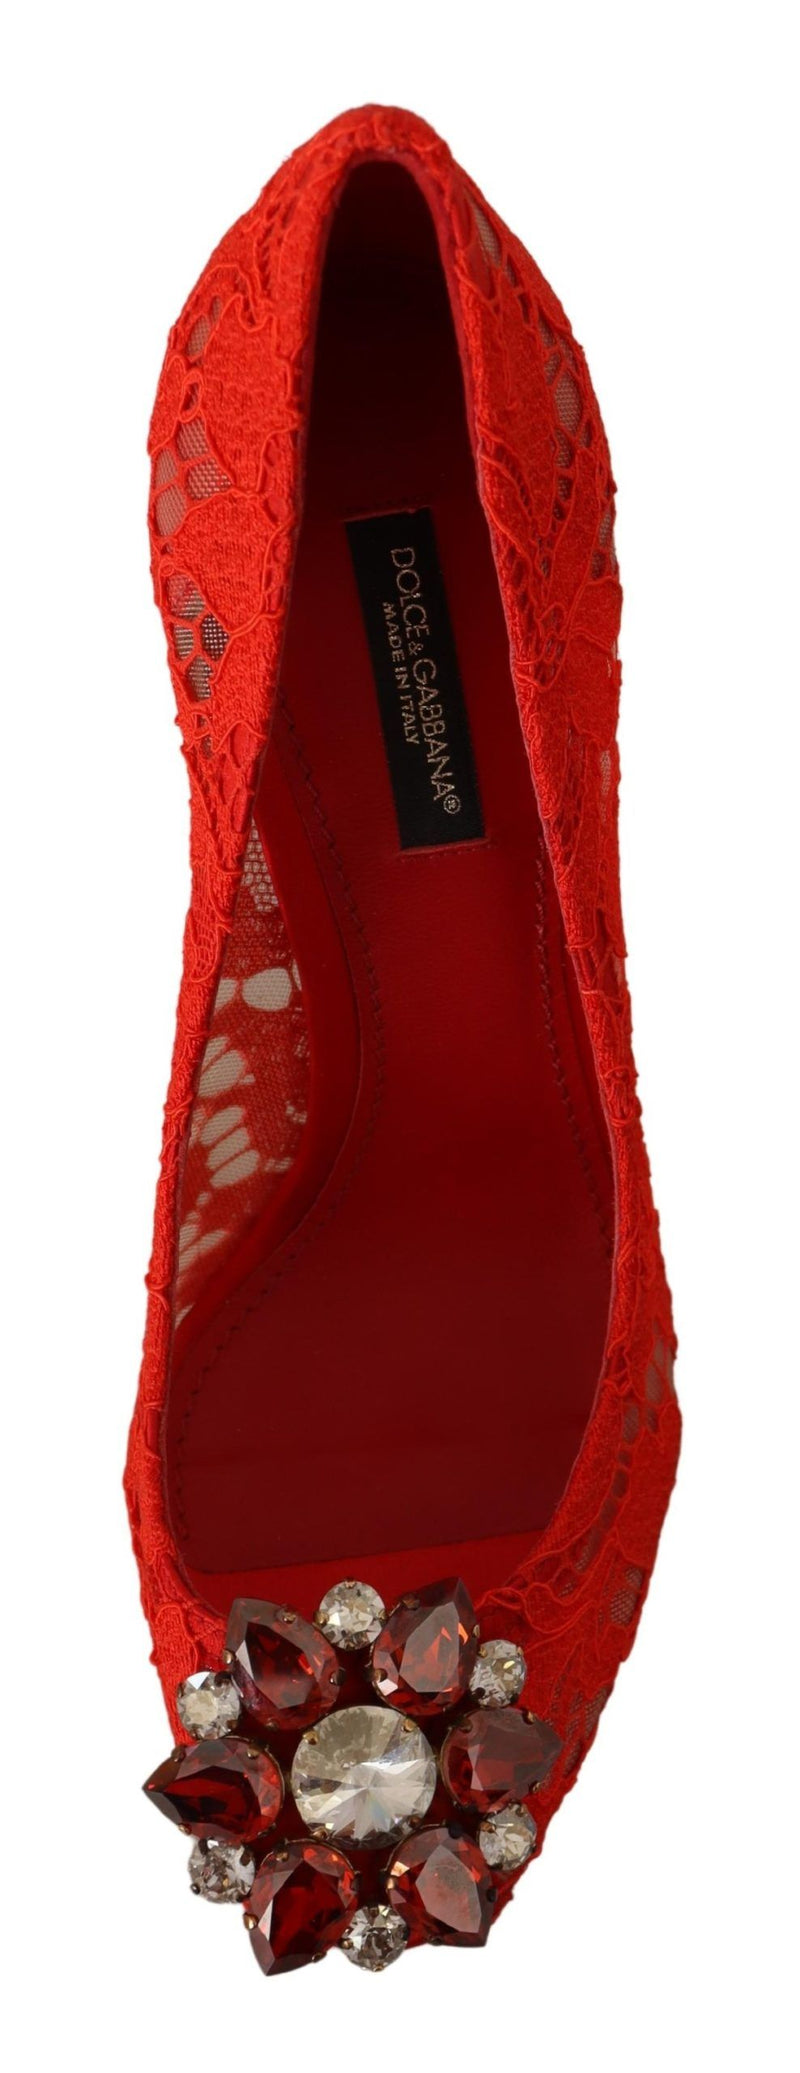 Dolce & Gabbana Red Taormina Lace Crystal Heels Women's Pumps